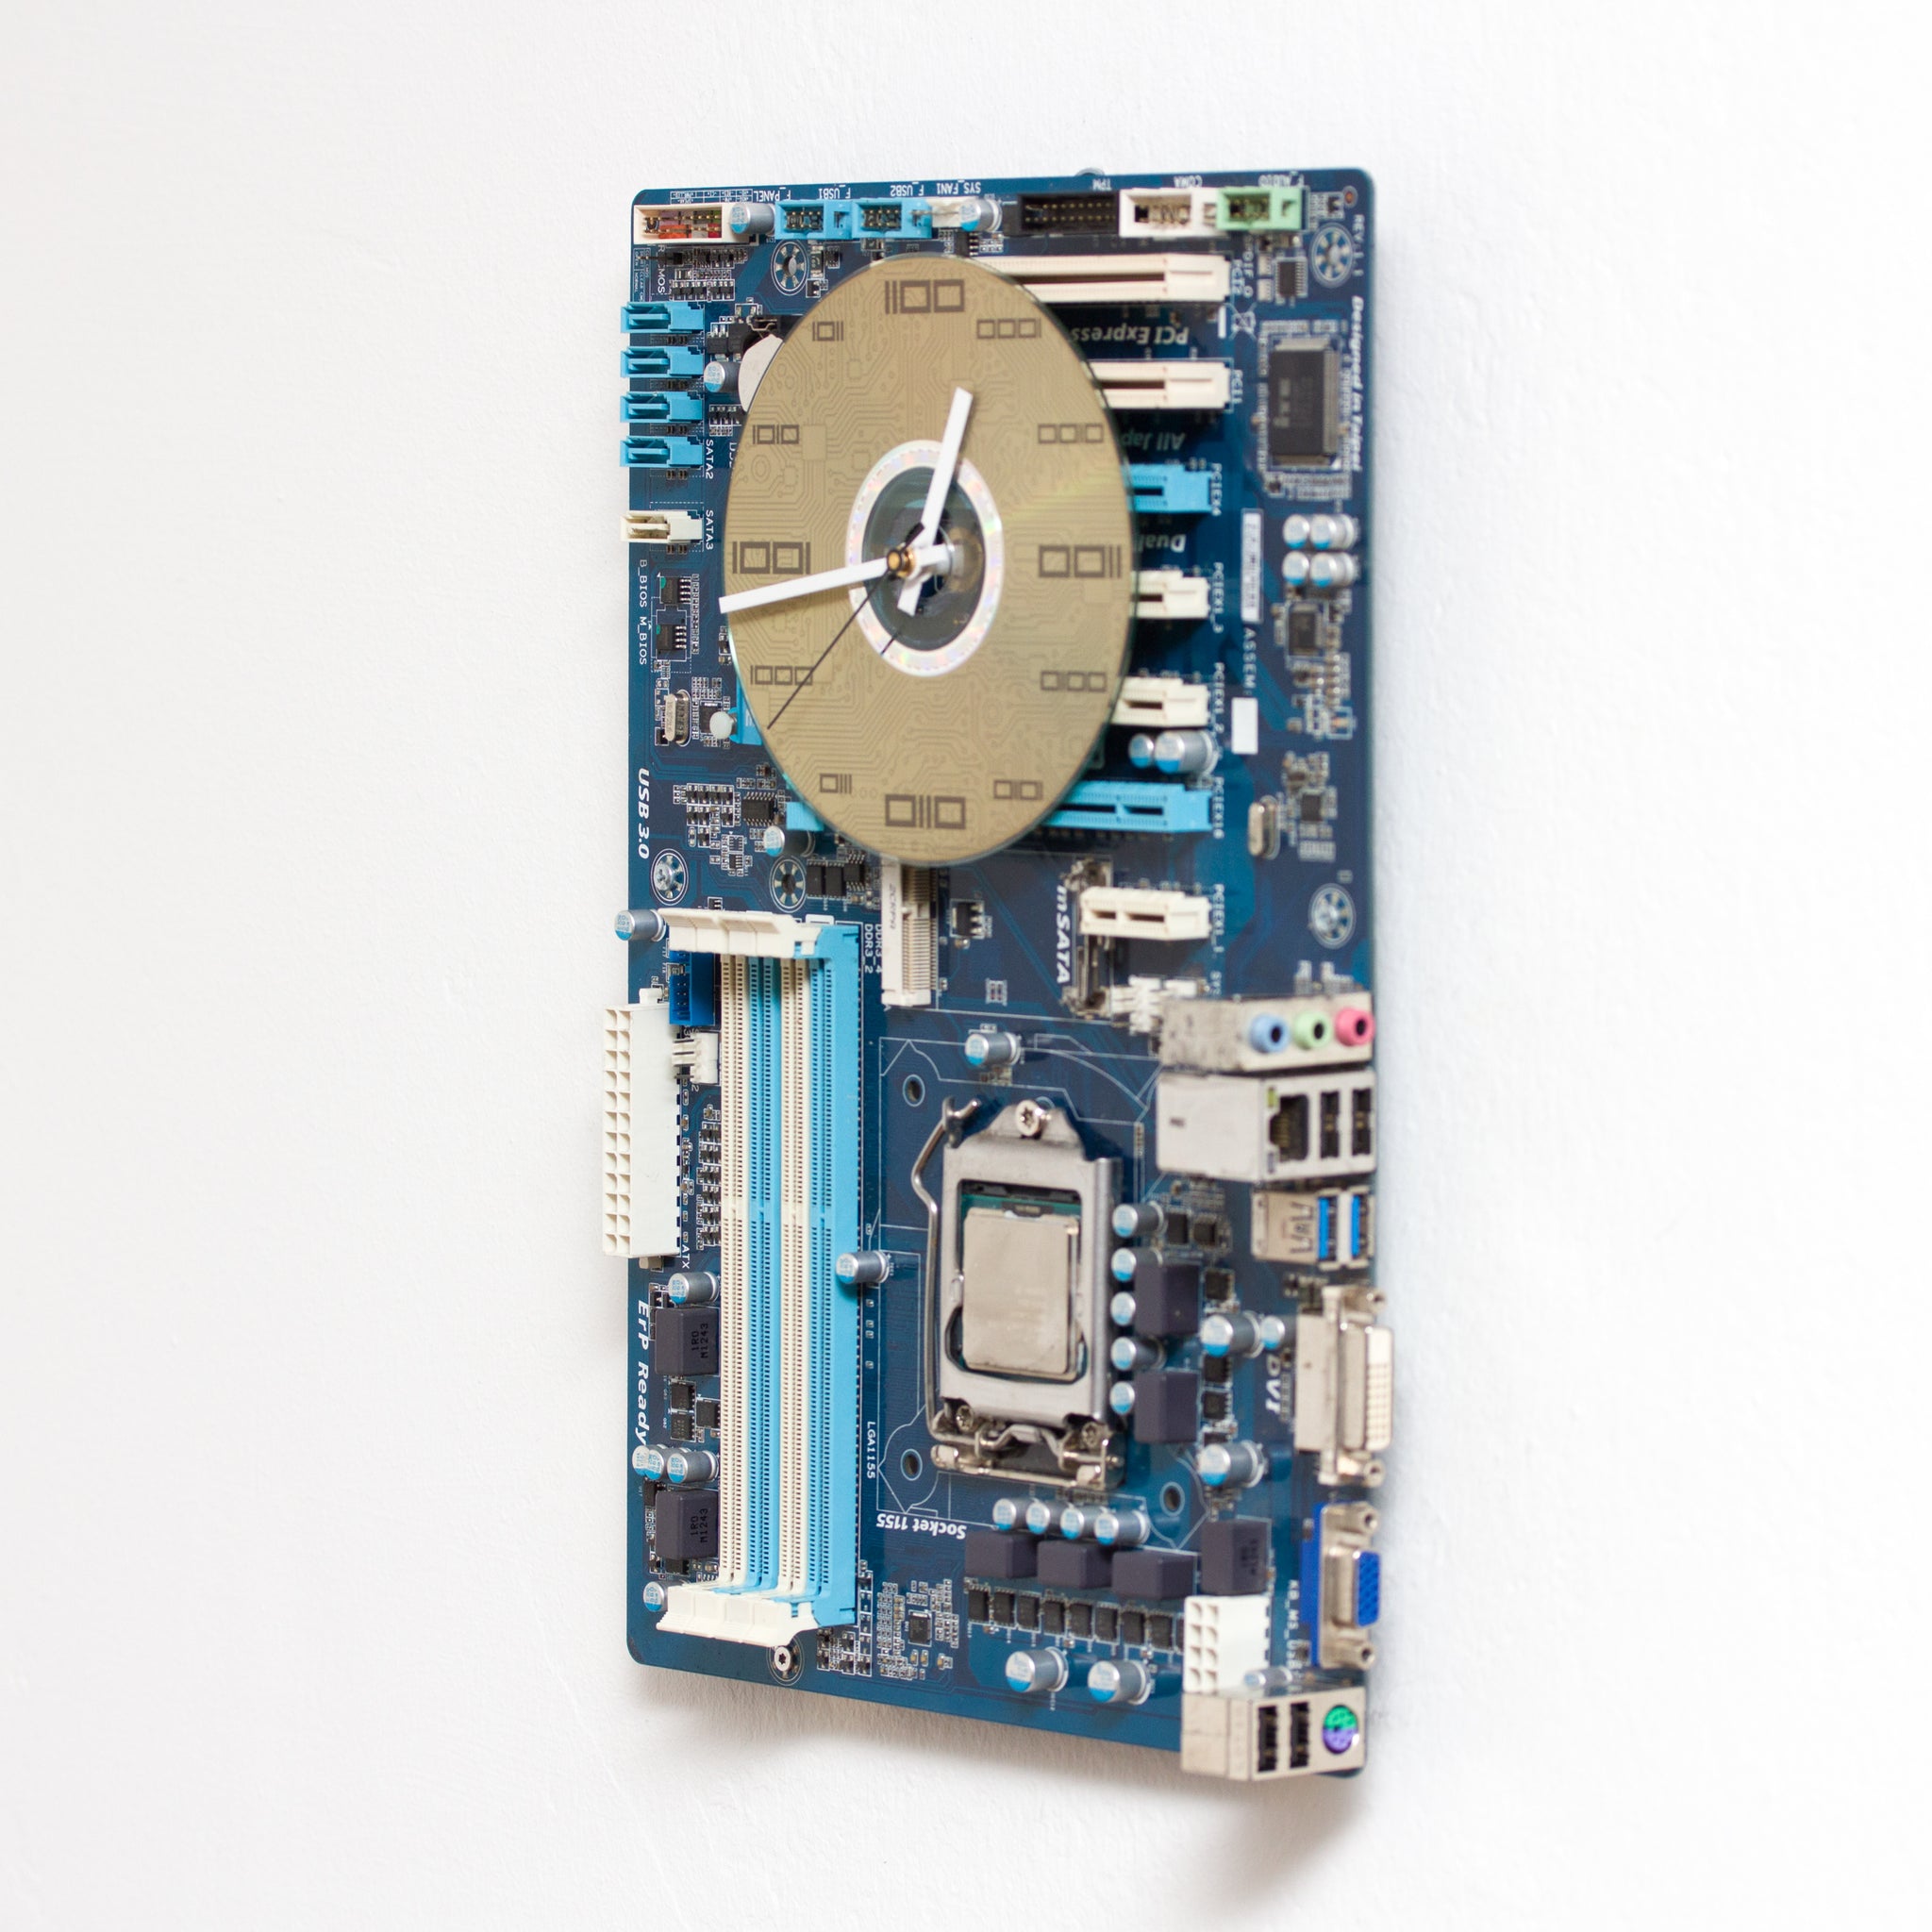 Geeky Wall Clock made of blue circuit board